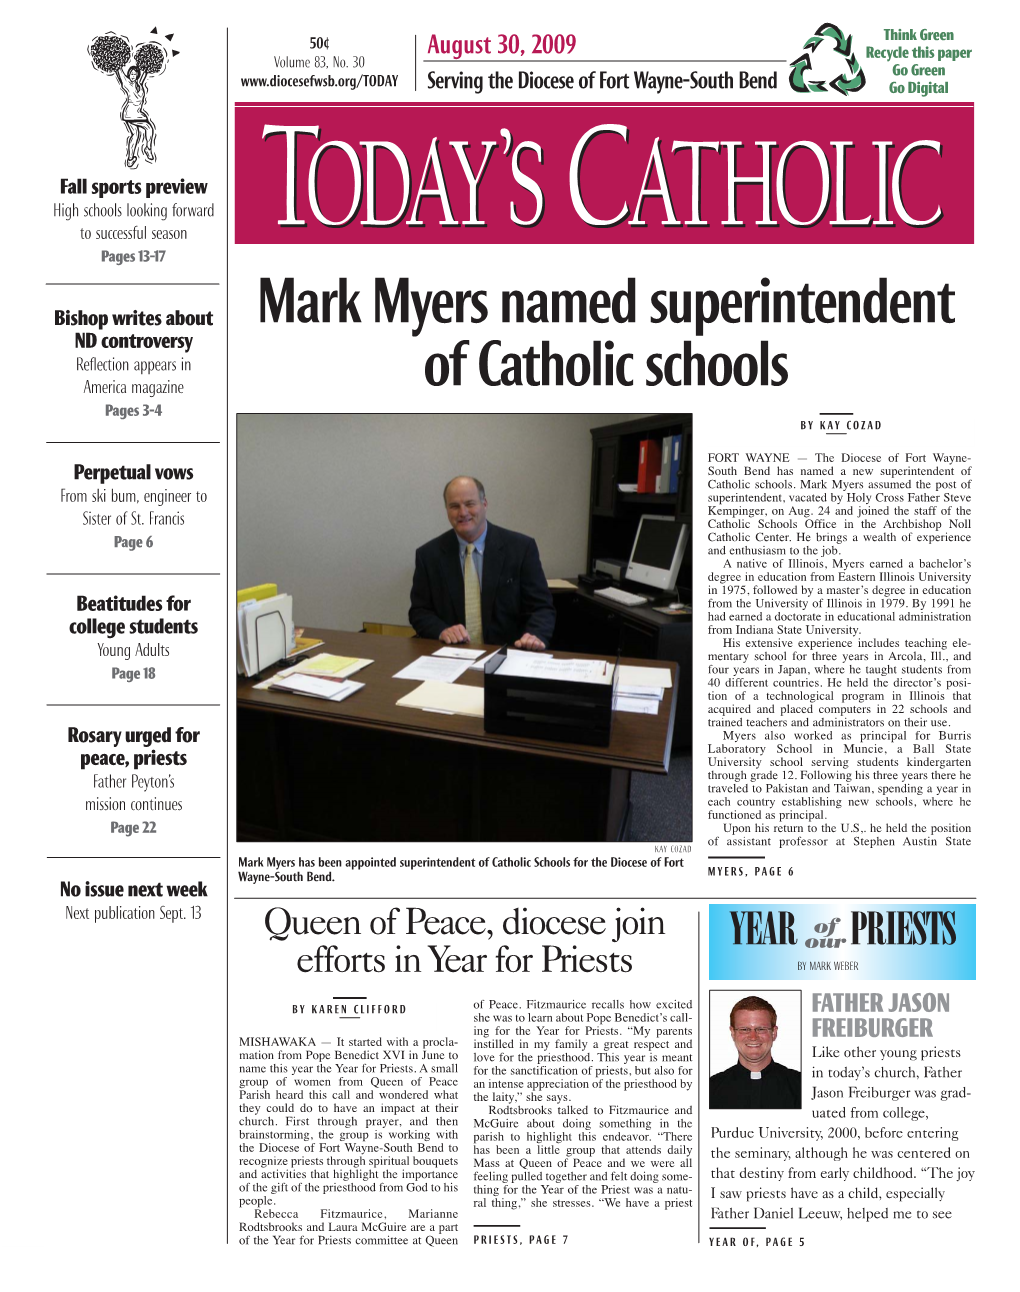 Mark Myers Named Superintendent of Catholic Schools